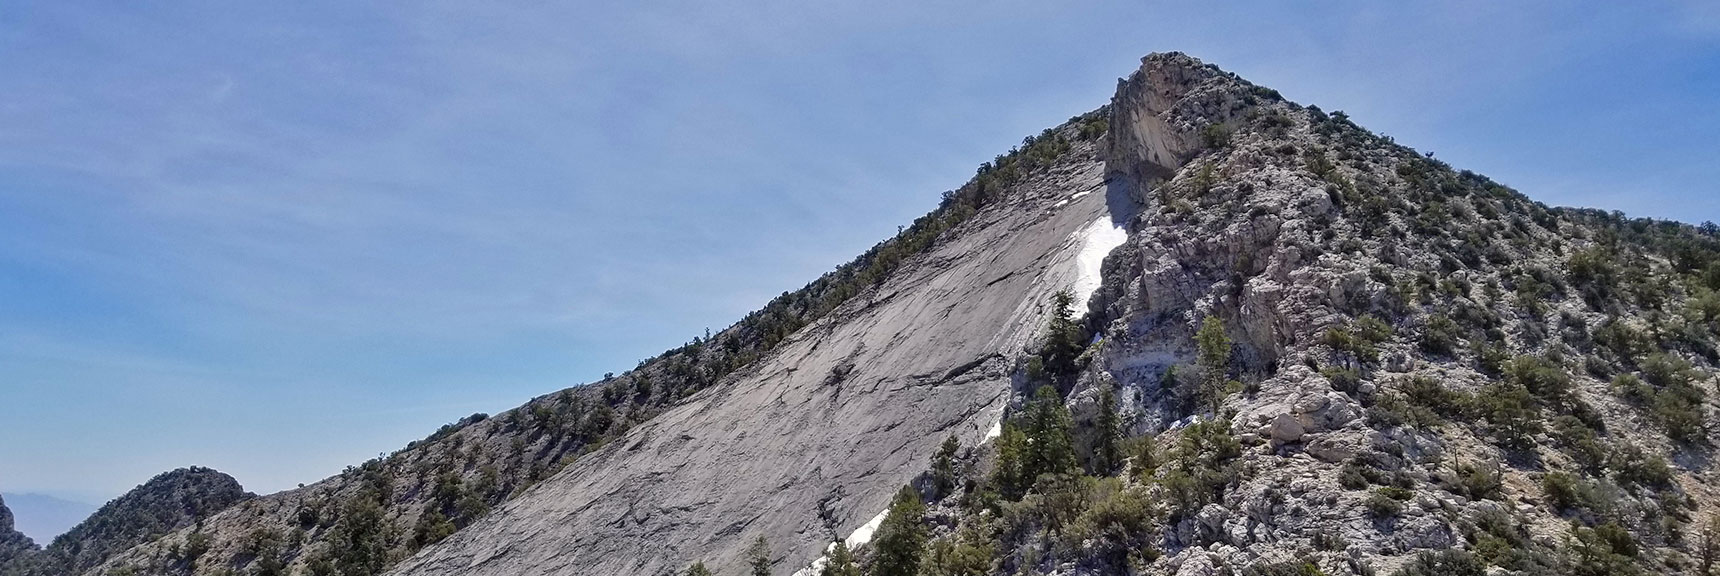 Devil's Slide Summit on La Madre Mountain, Nevada